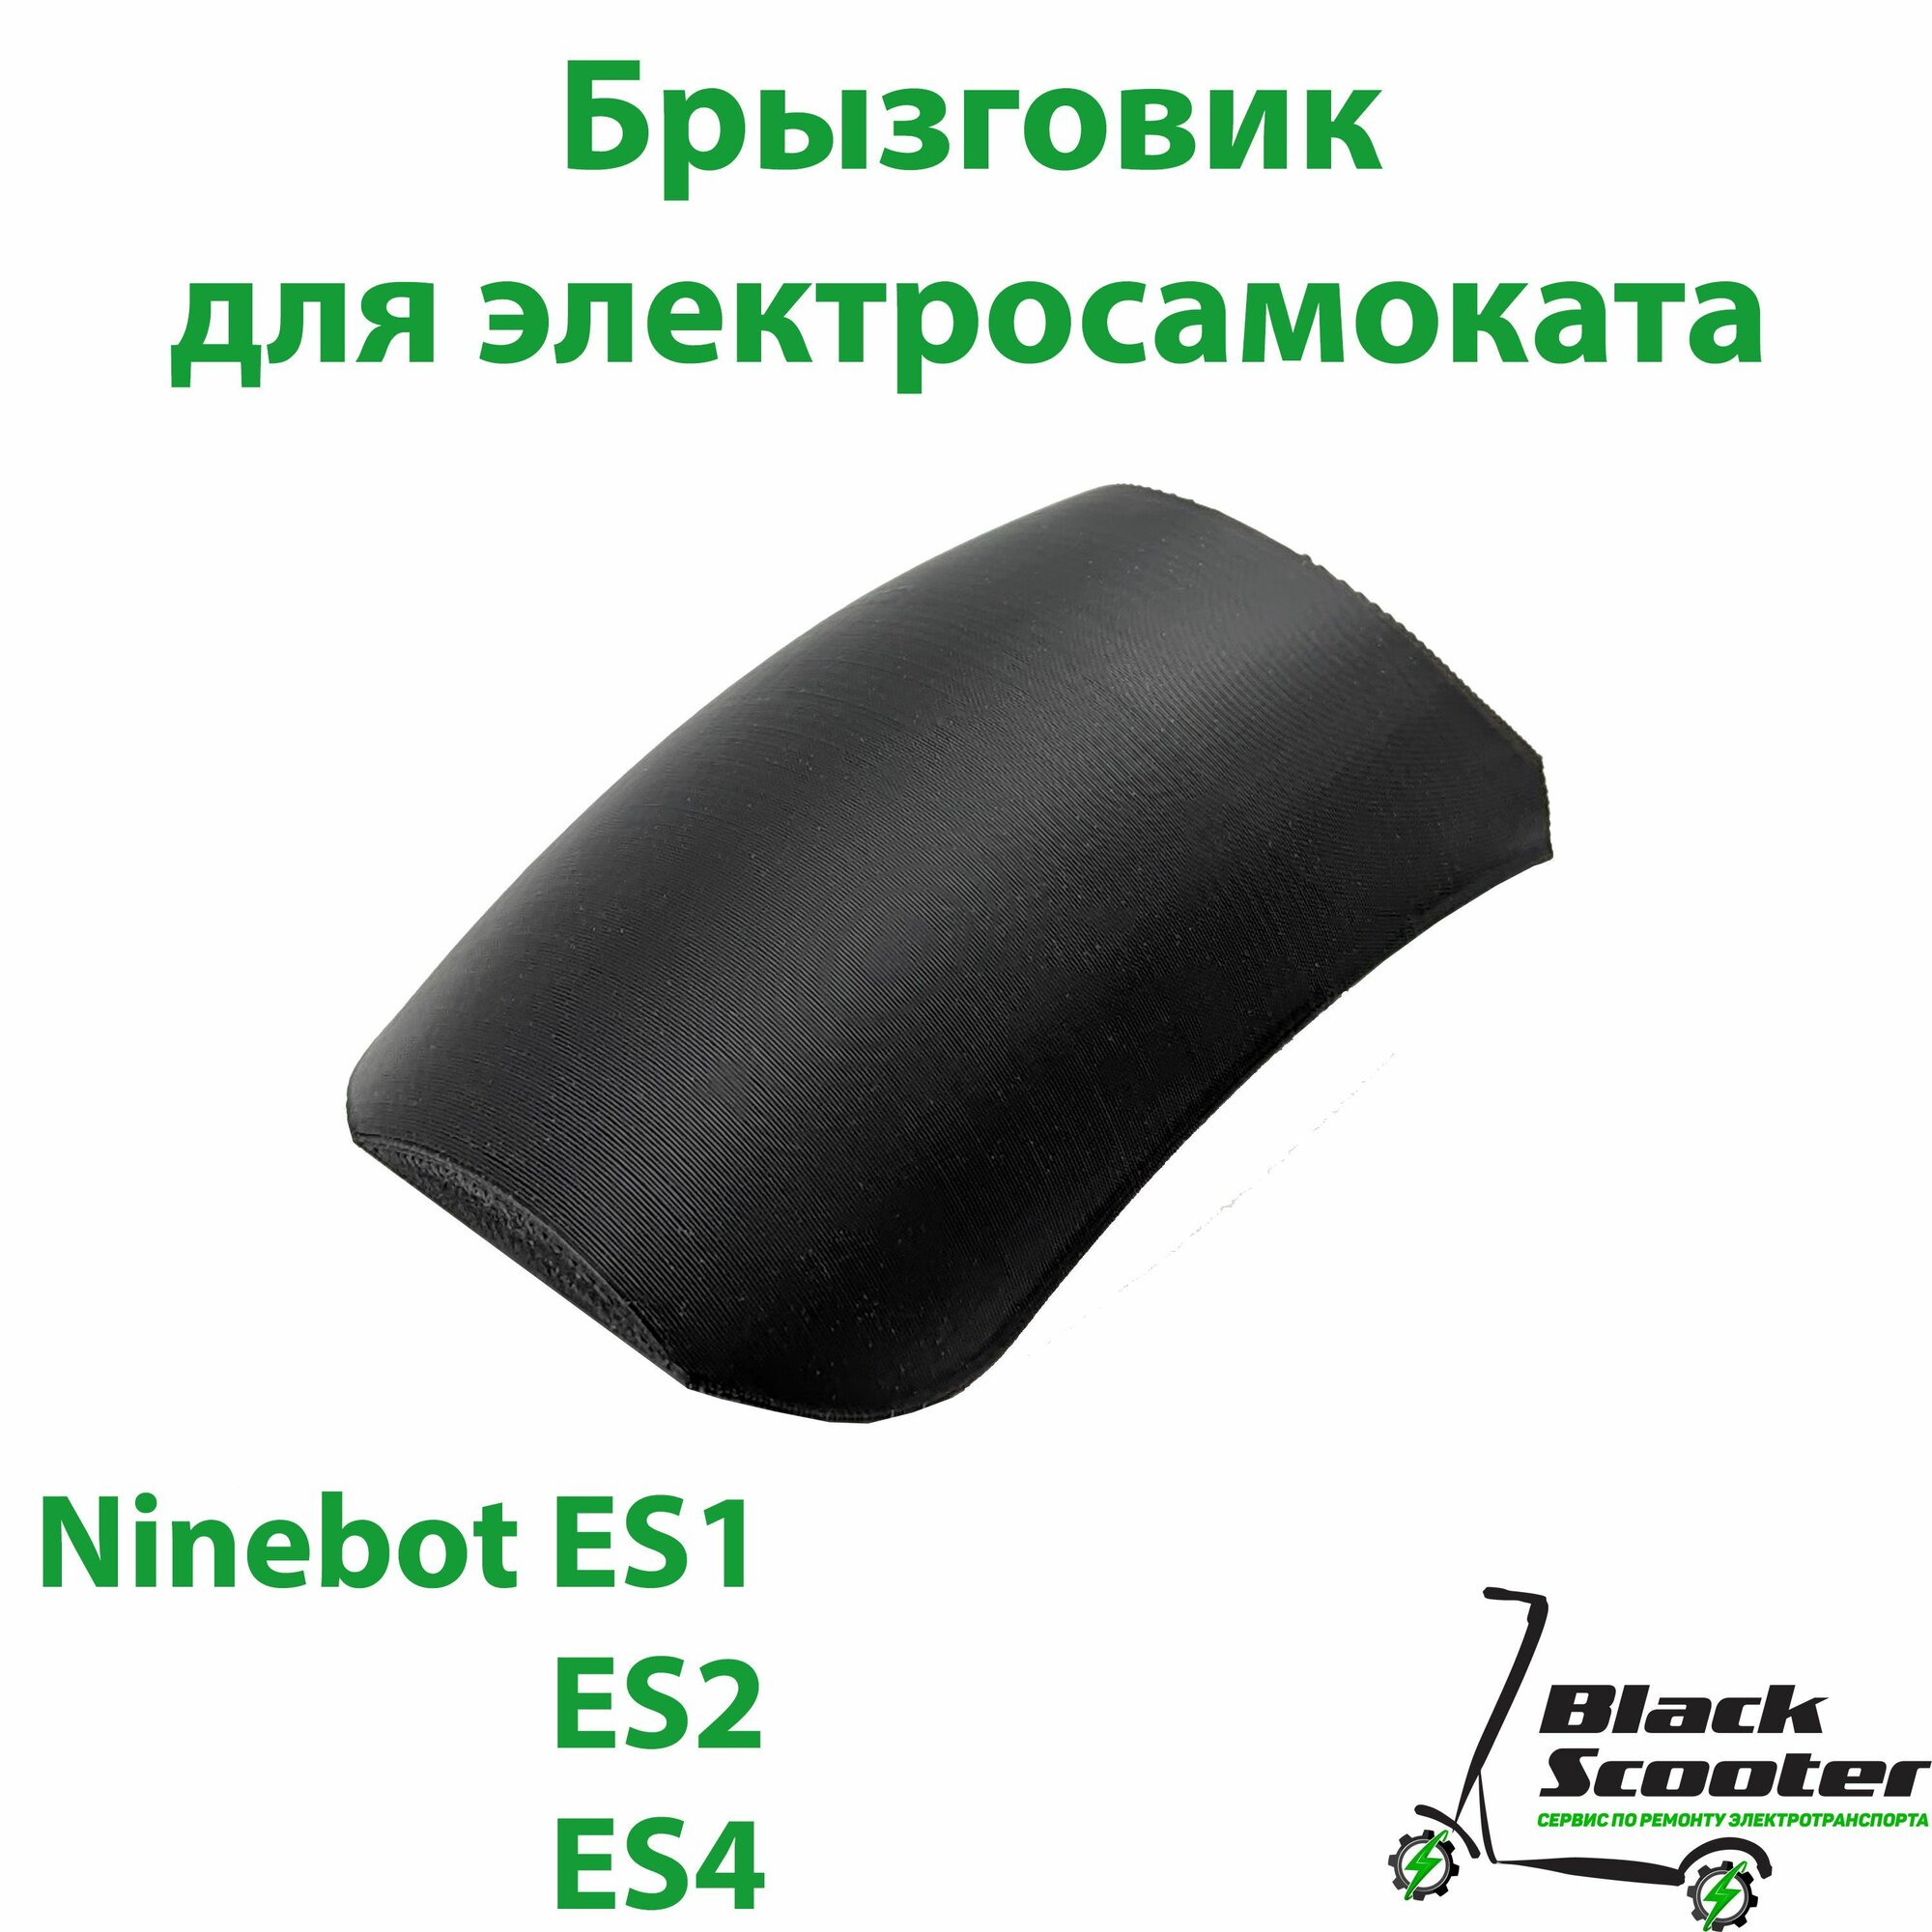 Брызговик для электросамоката Ninebot ES